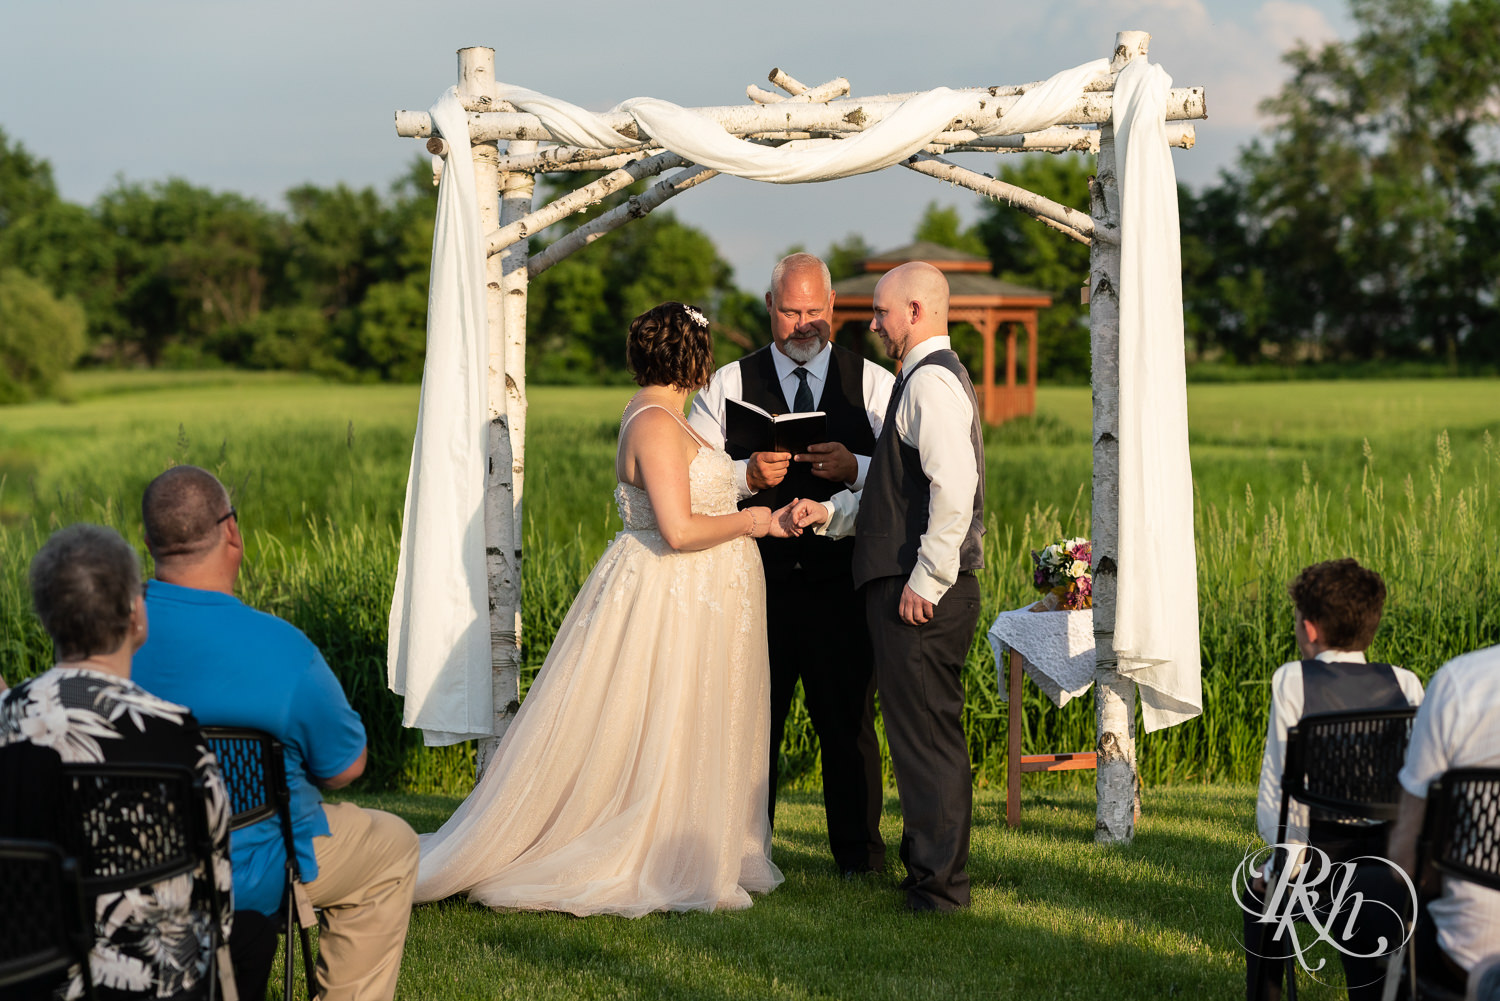 Bride and groom at alter at sunset ceremony at Barn at Crocker's Creek in Faribault, Minnesota.